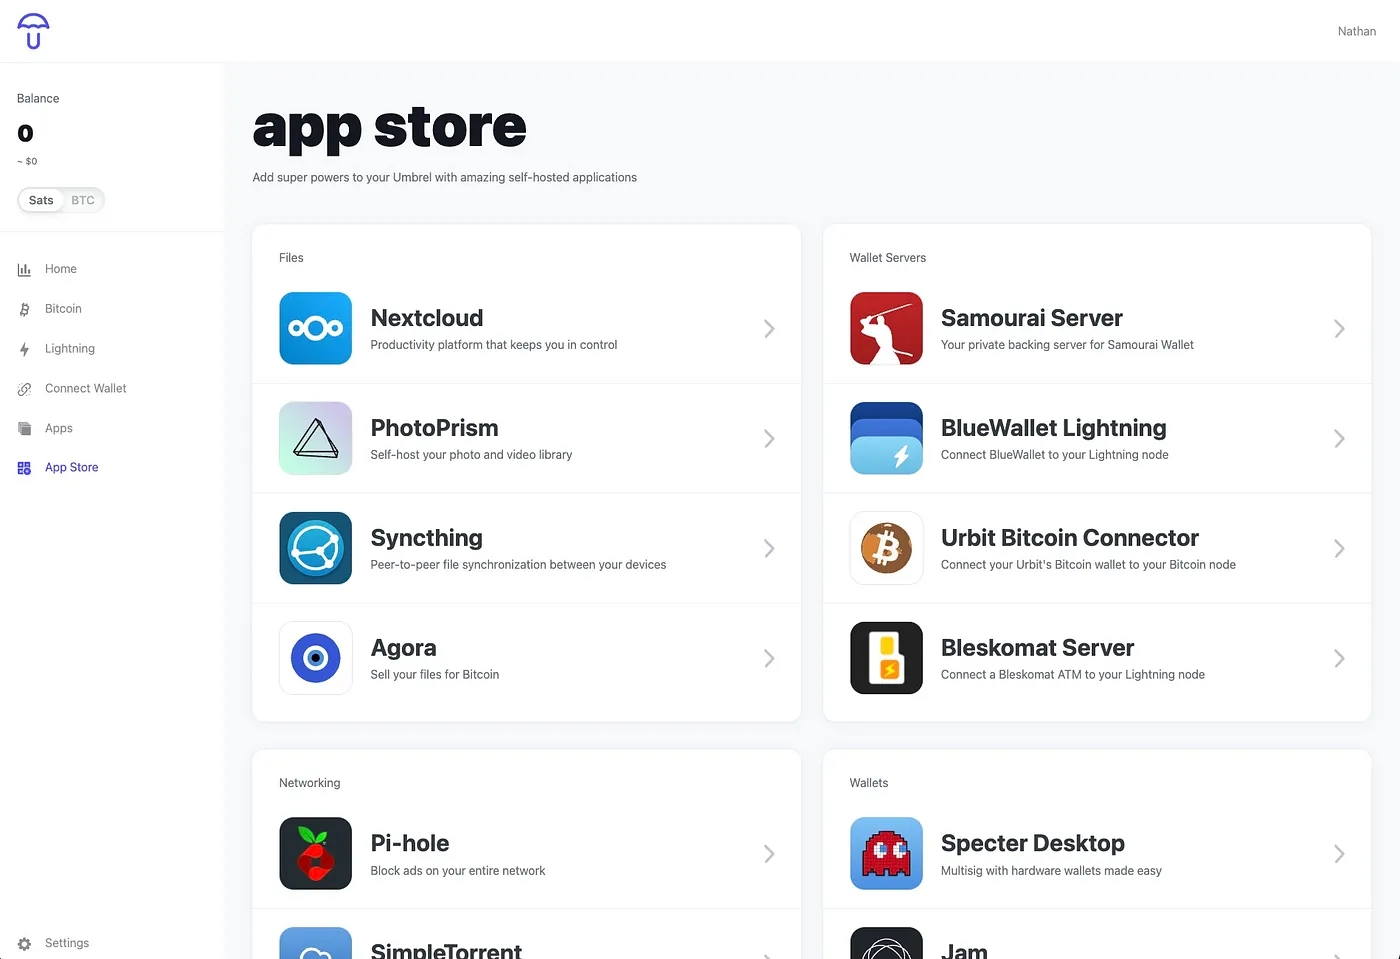 Umbrel app store